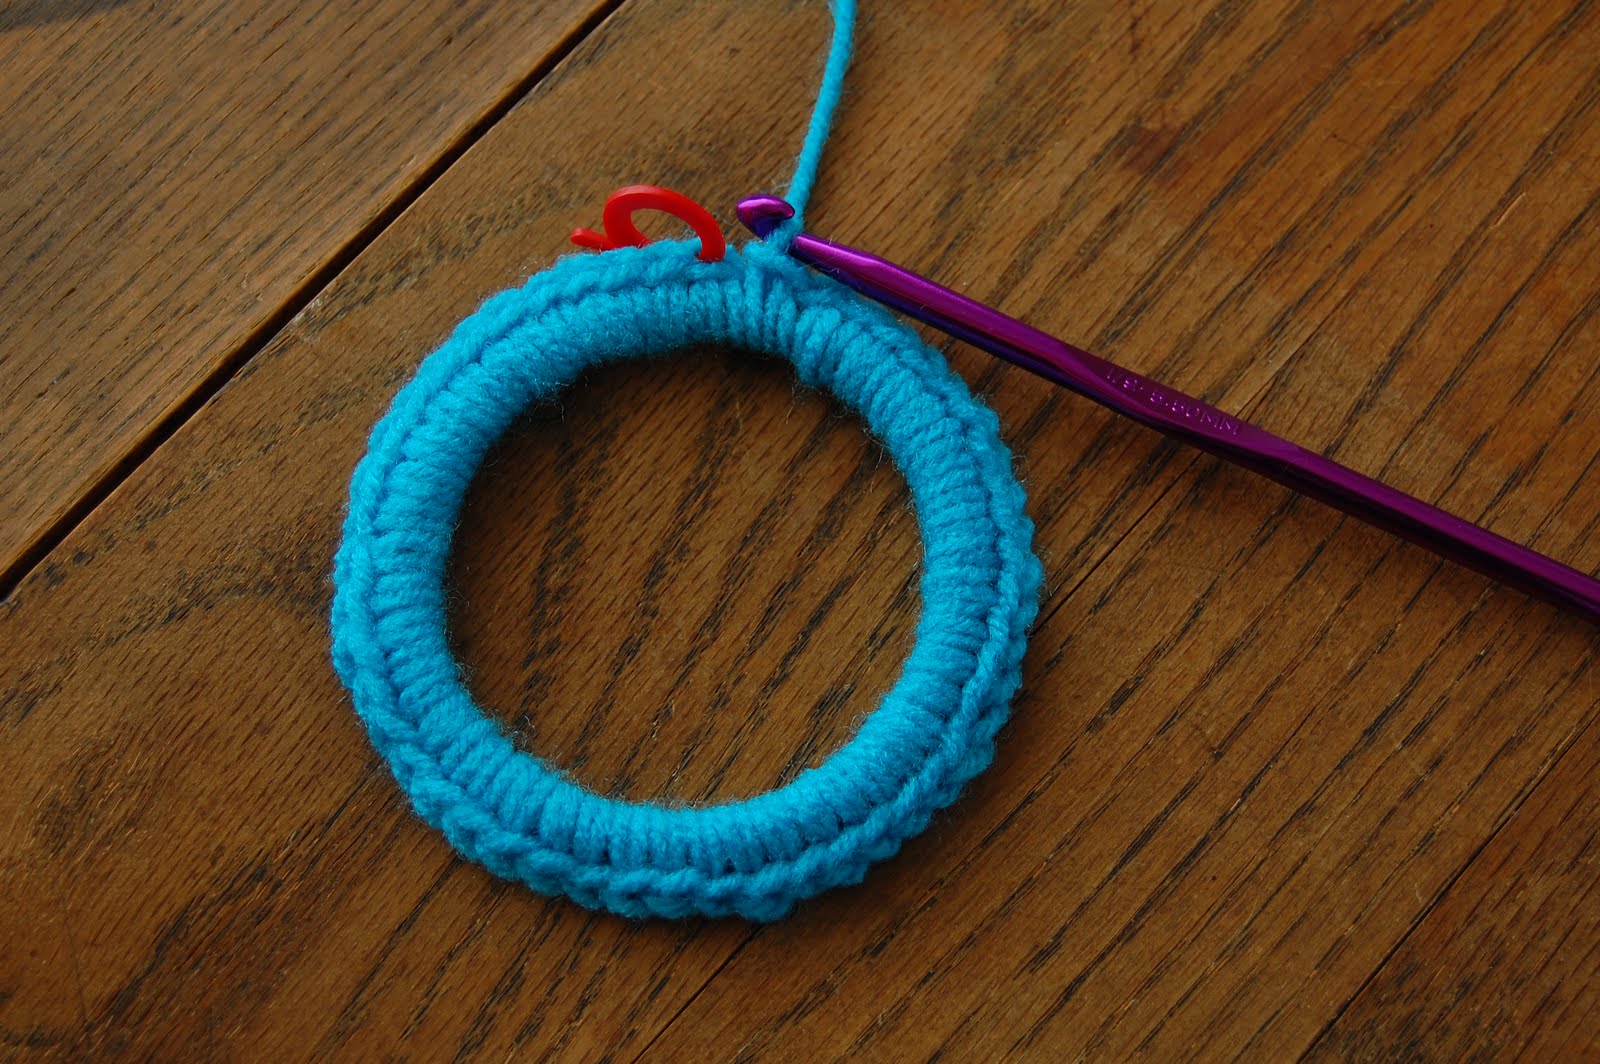 Lola Nova - Whatever Lola Wants: Mary Go Round crochet flower ring tutorial